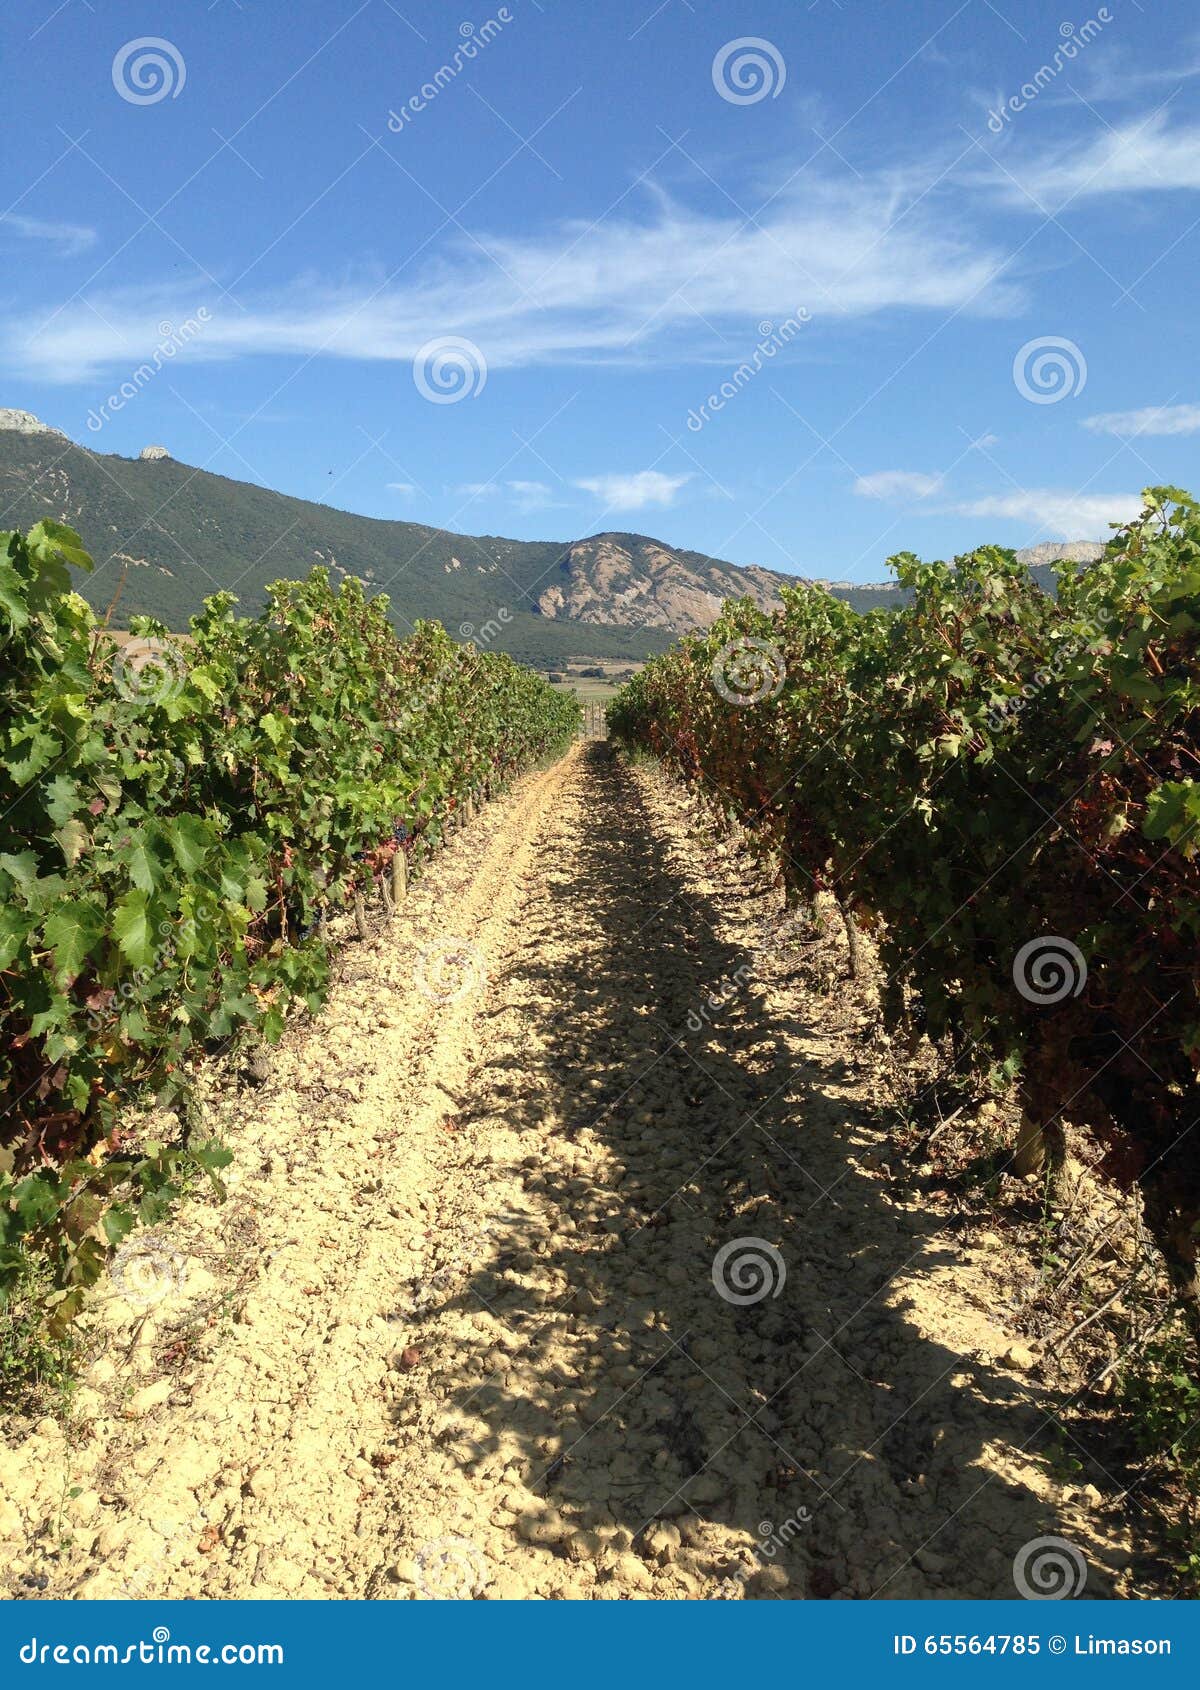 tempranillo - vineyard